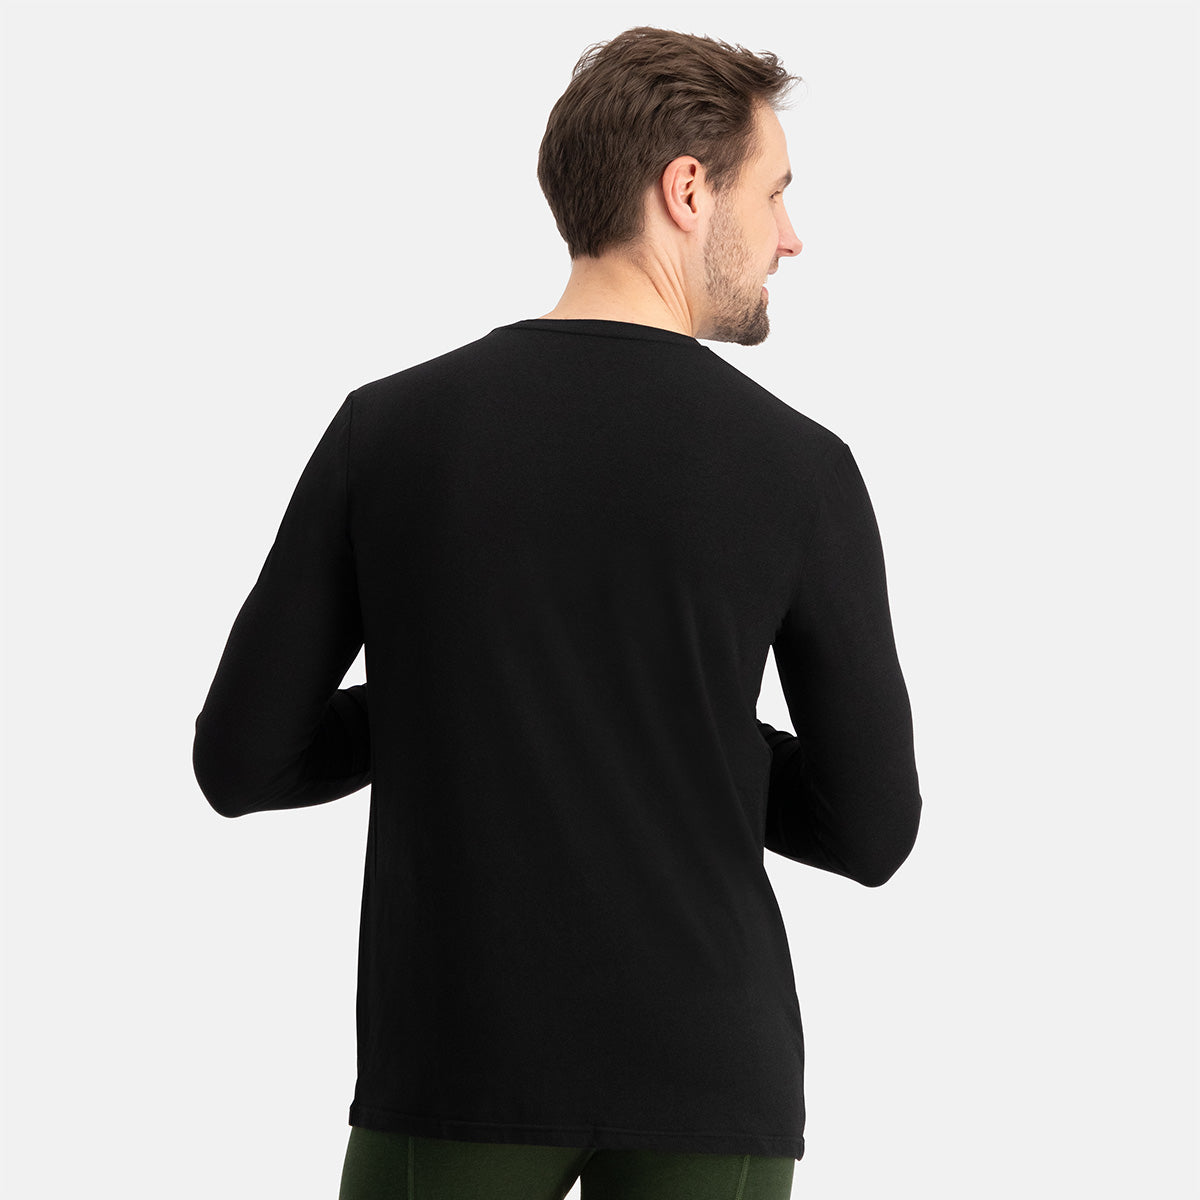 Bamboo Basics - T-shirts lange mouw Ralph ronde hals  – Zwart